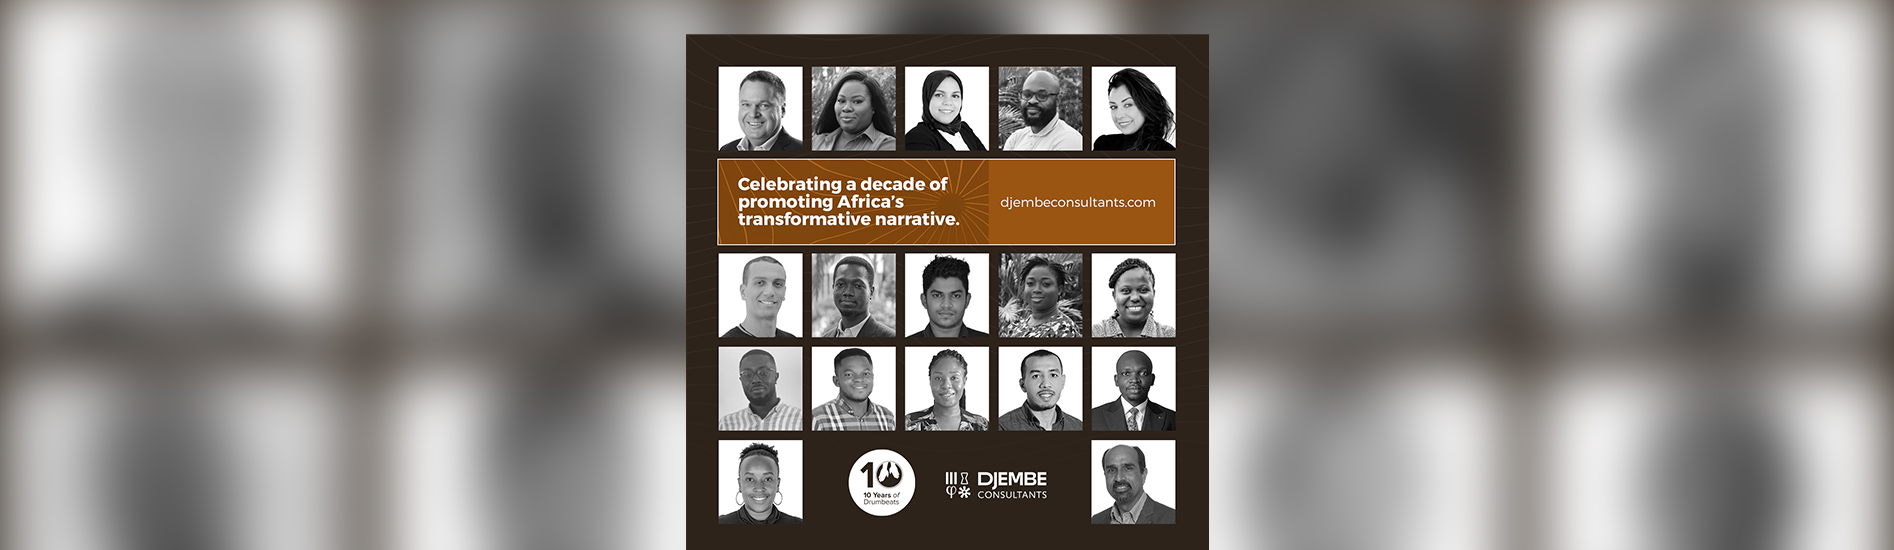 Djembe Consultants Announces 10th Anniversary Celebration Campaign